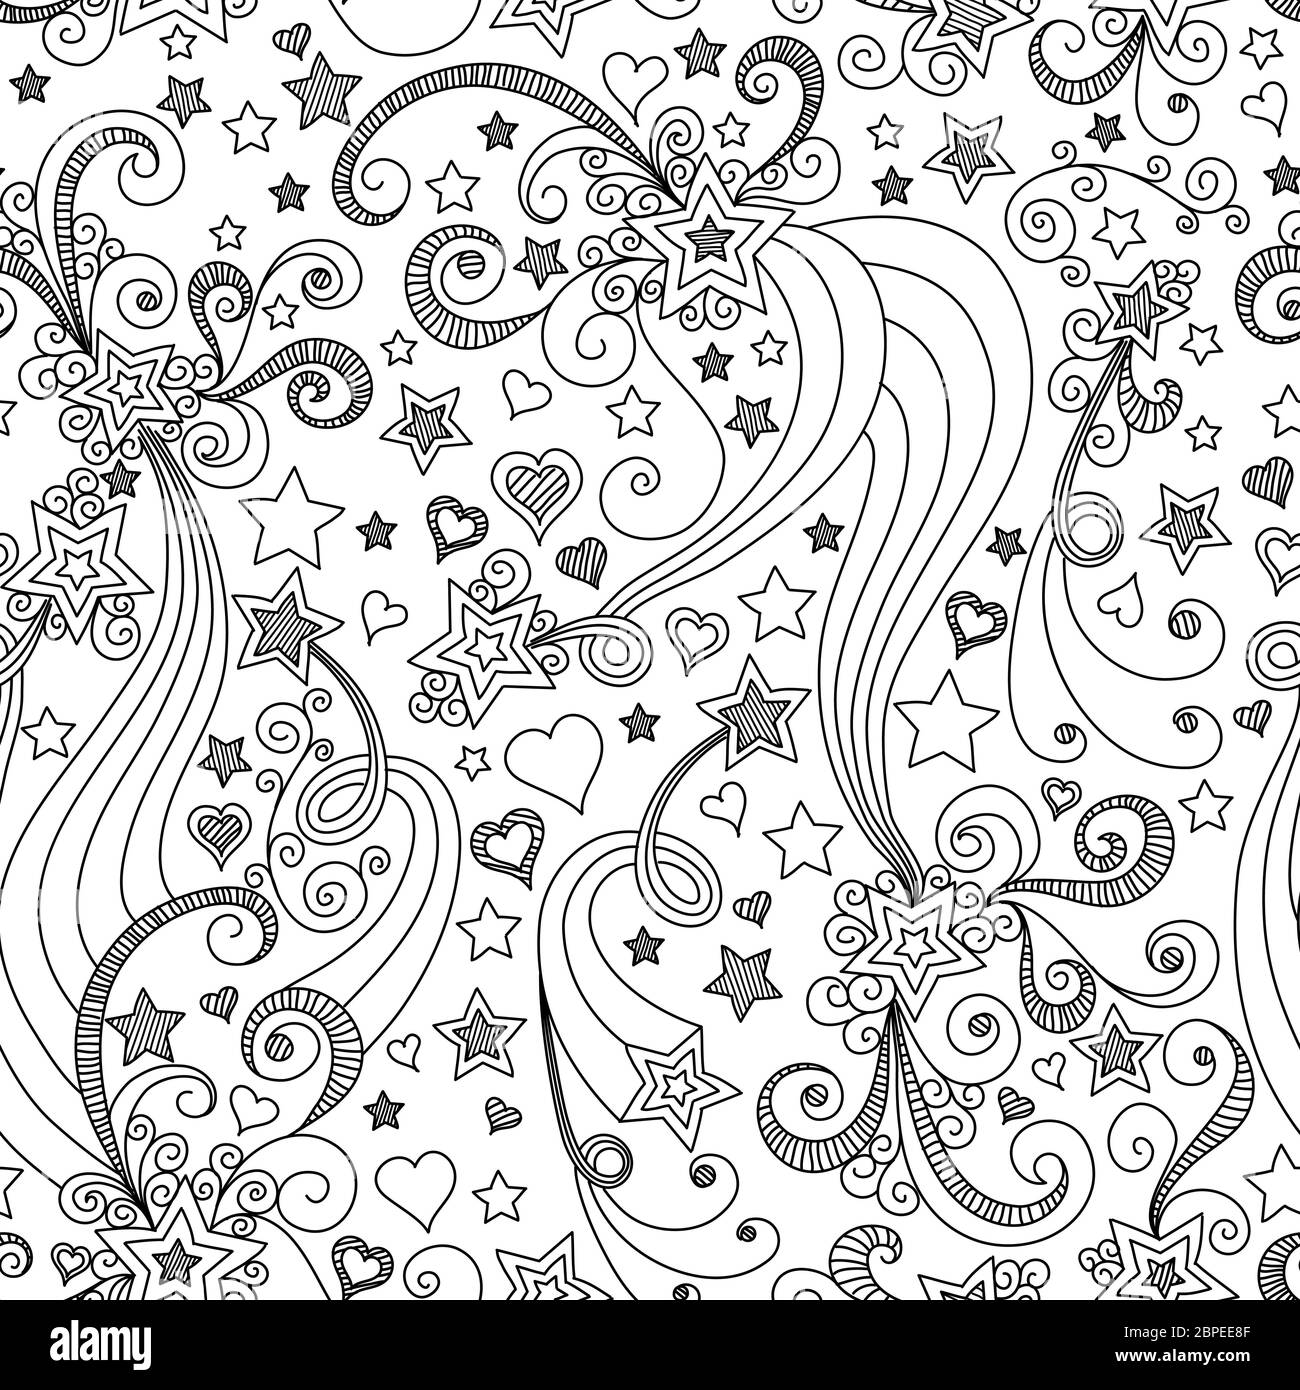 vector seamless black and white star pattern of spirals, swirls ...